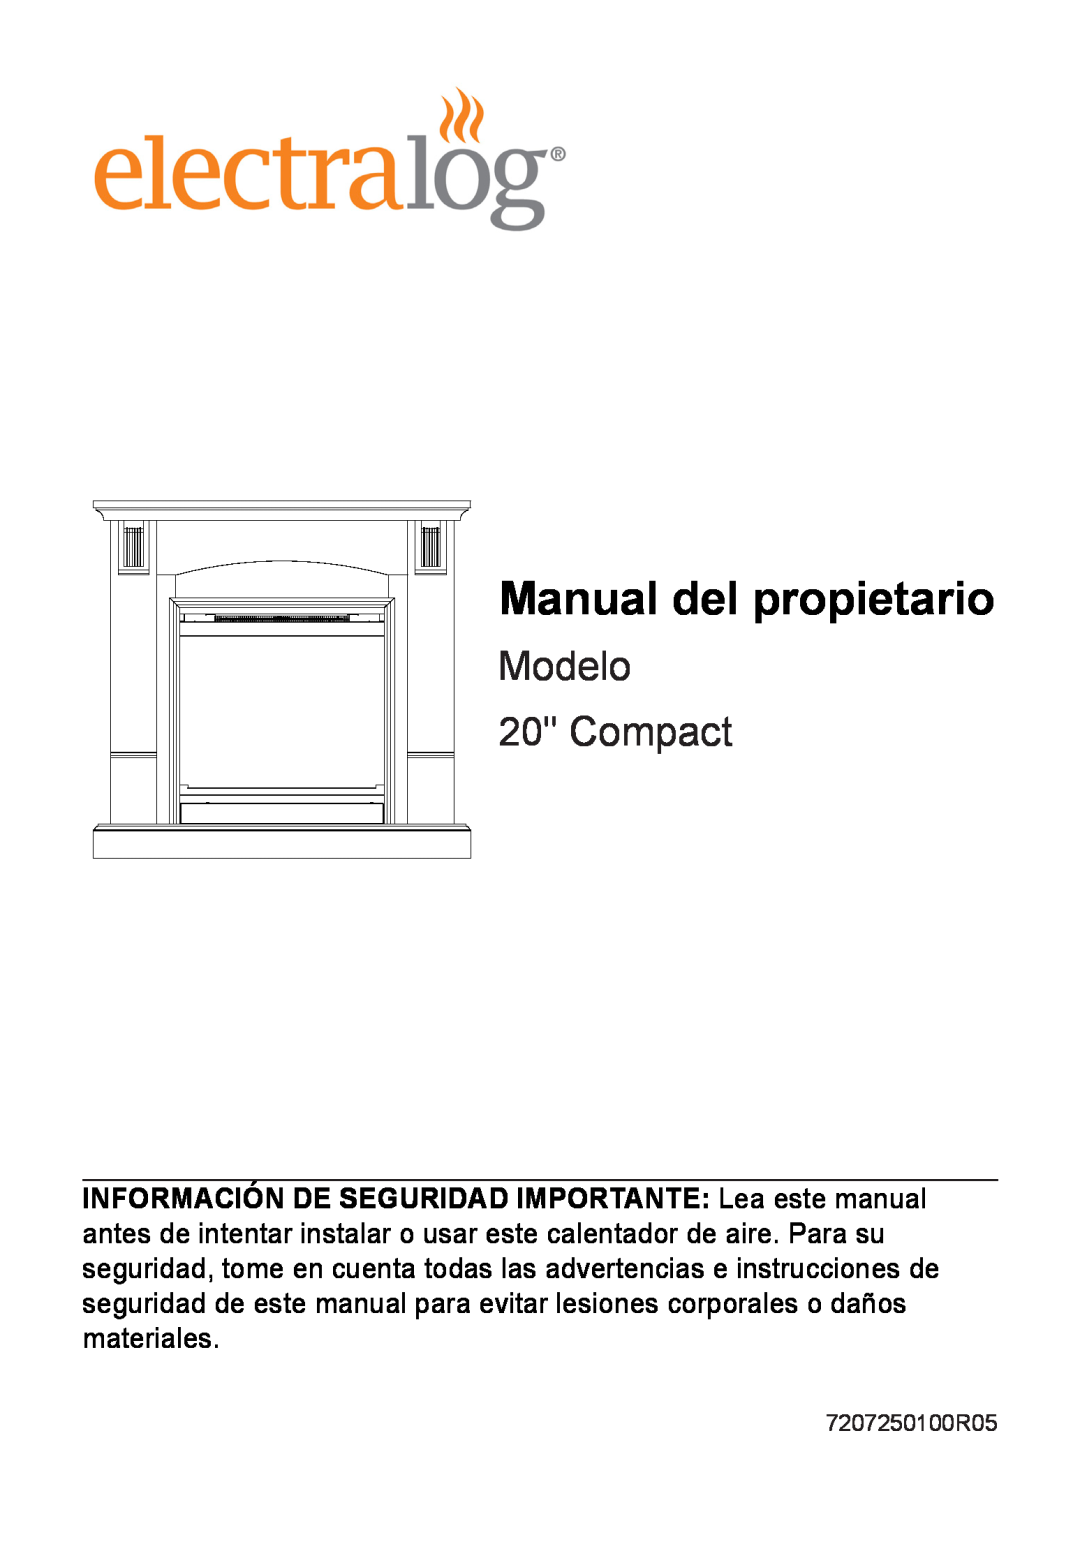 Dimplex 7207250100R05 owner manual Manual del propietario, Modelo 20 Compact 